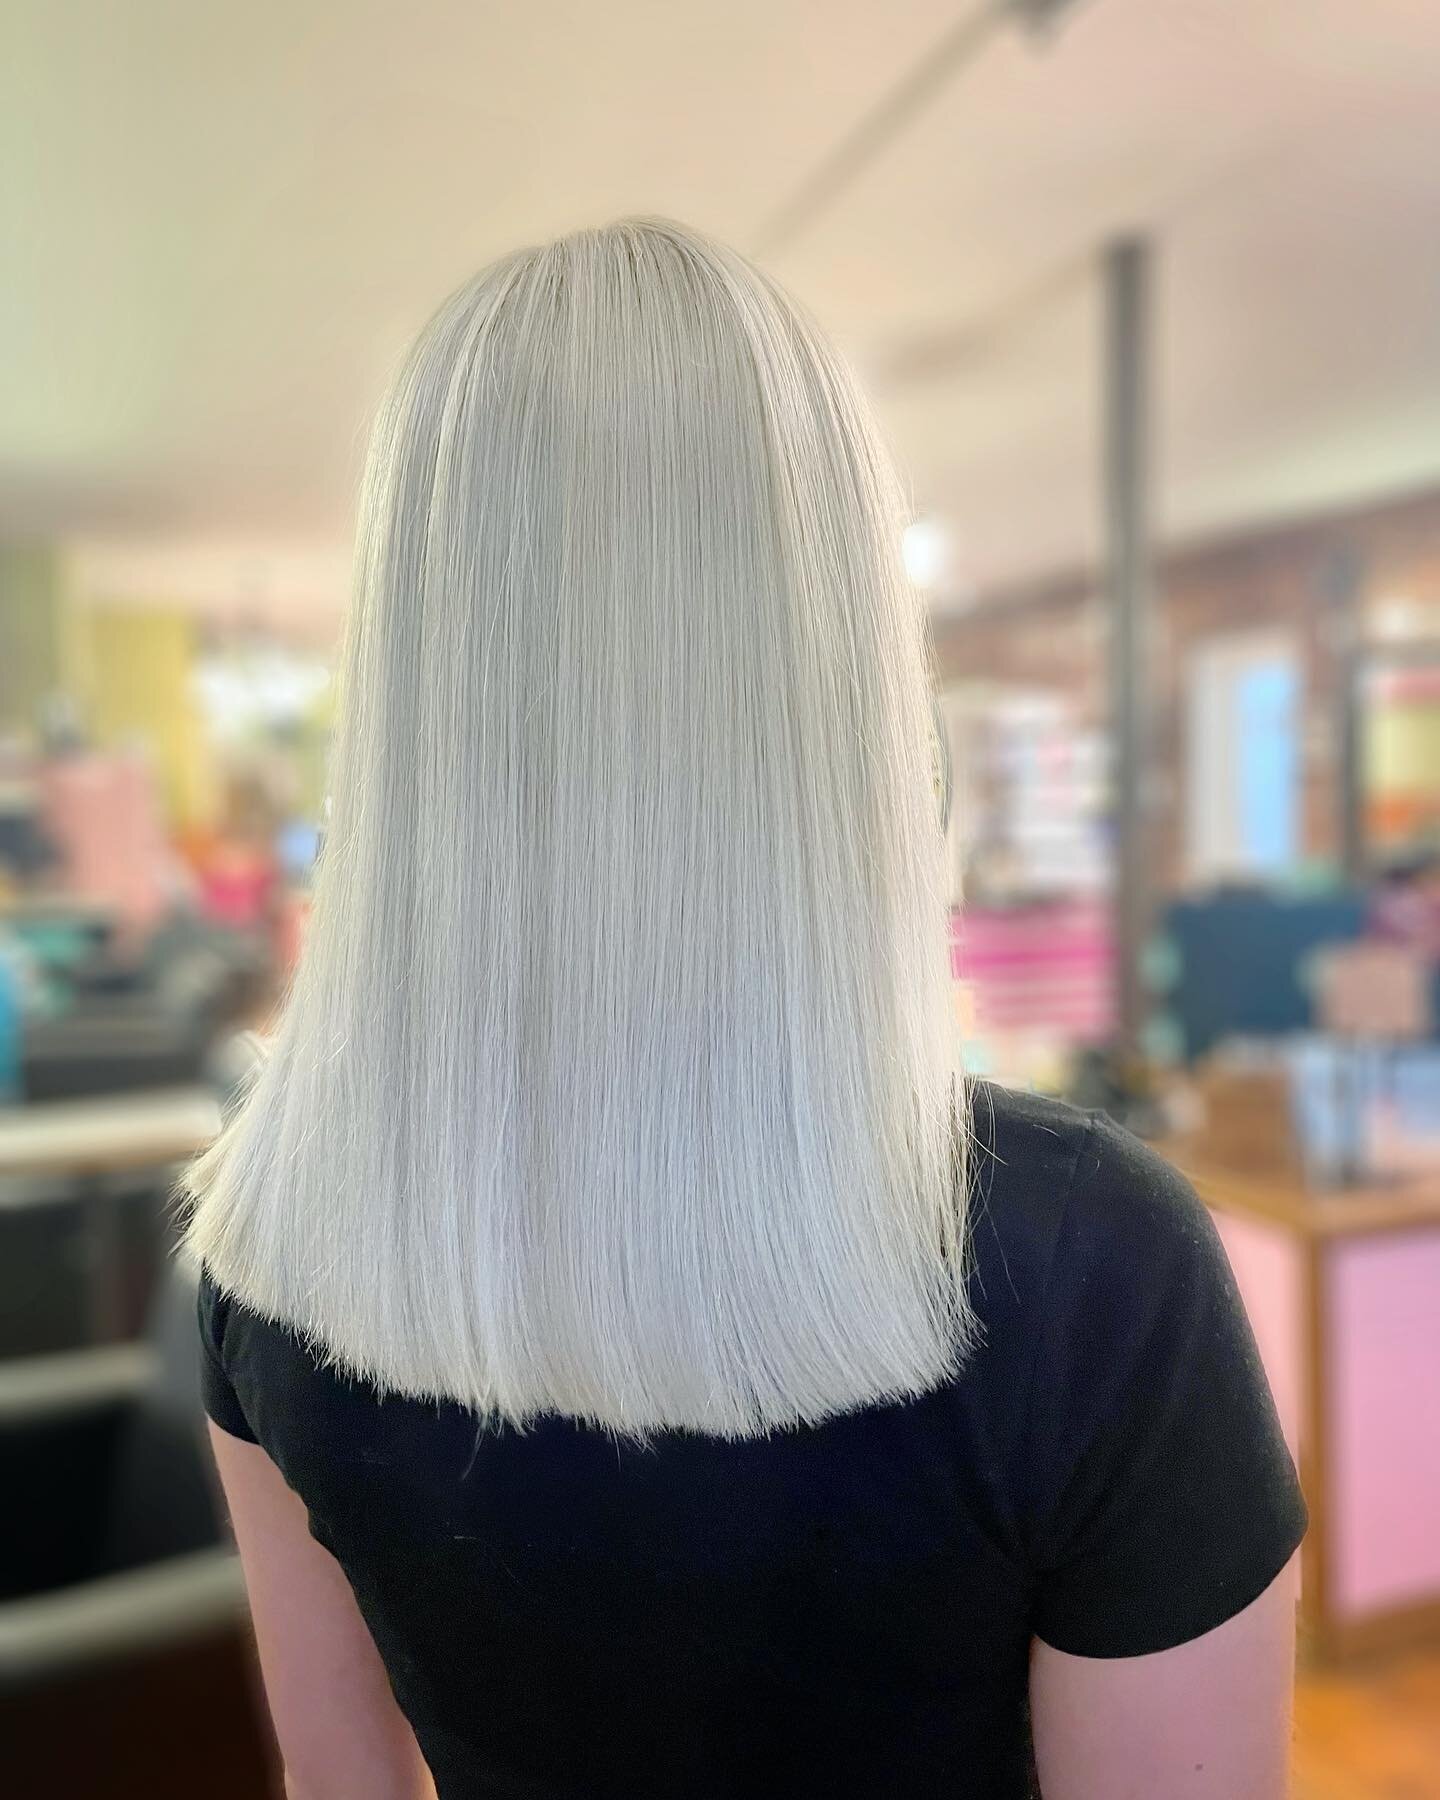 lil Blonde Bliss transformation for your day 🤩🤩🤩
Swipe for before 
#hairstylist #hair #blondehair #platinum #lexingtonstylist #lexingtonkentucky #sharethelex #salonchacha #wella #wellahair